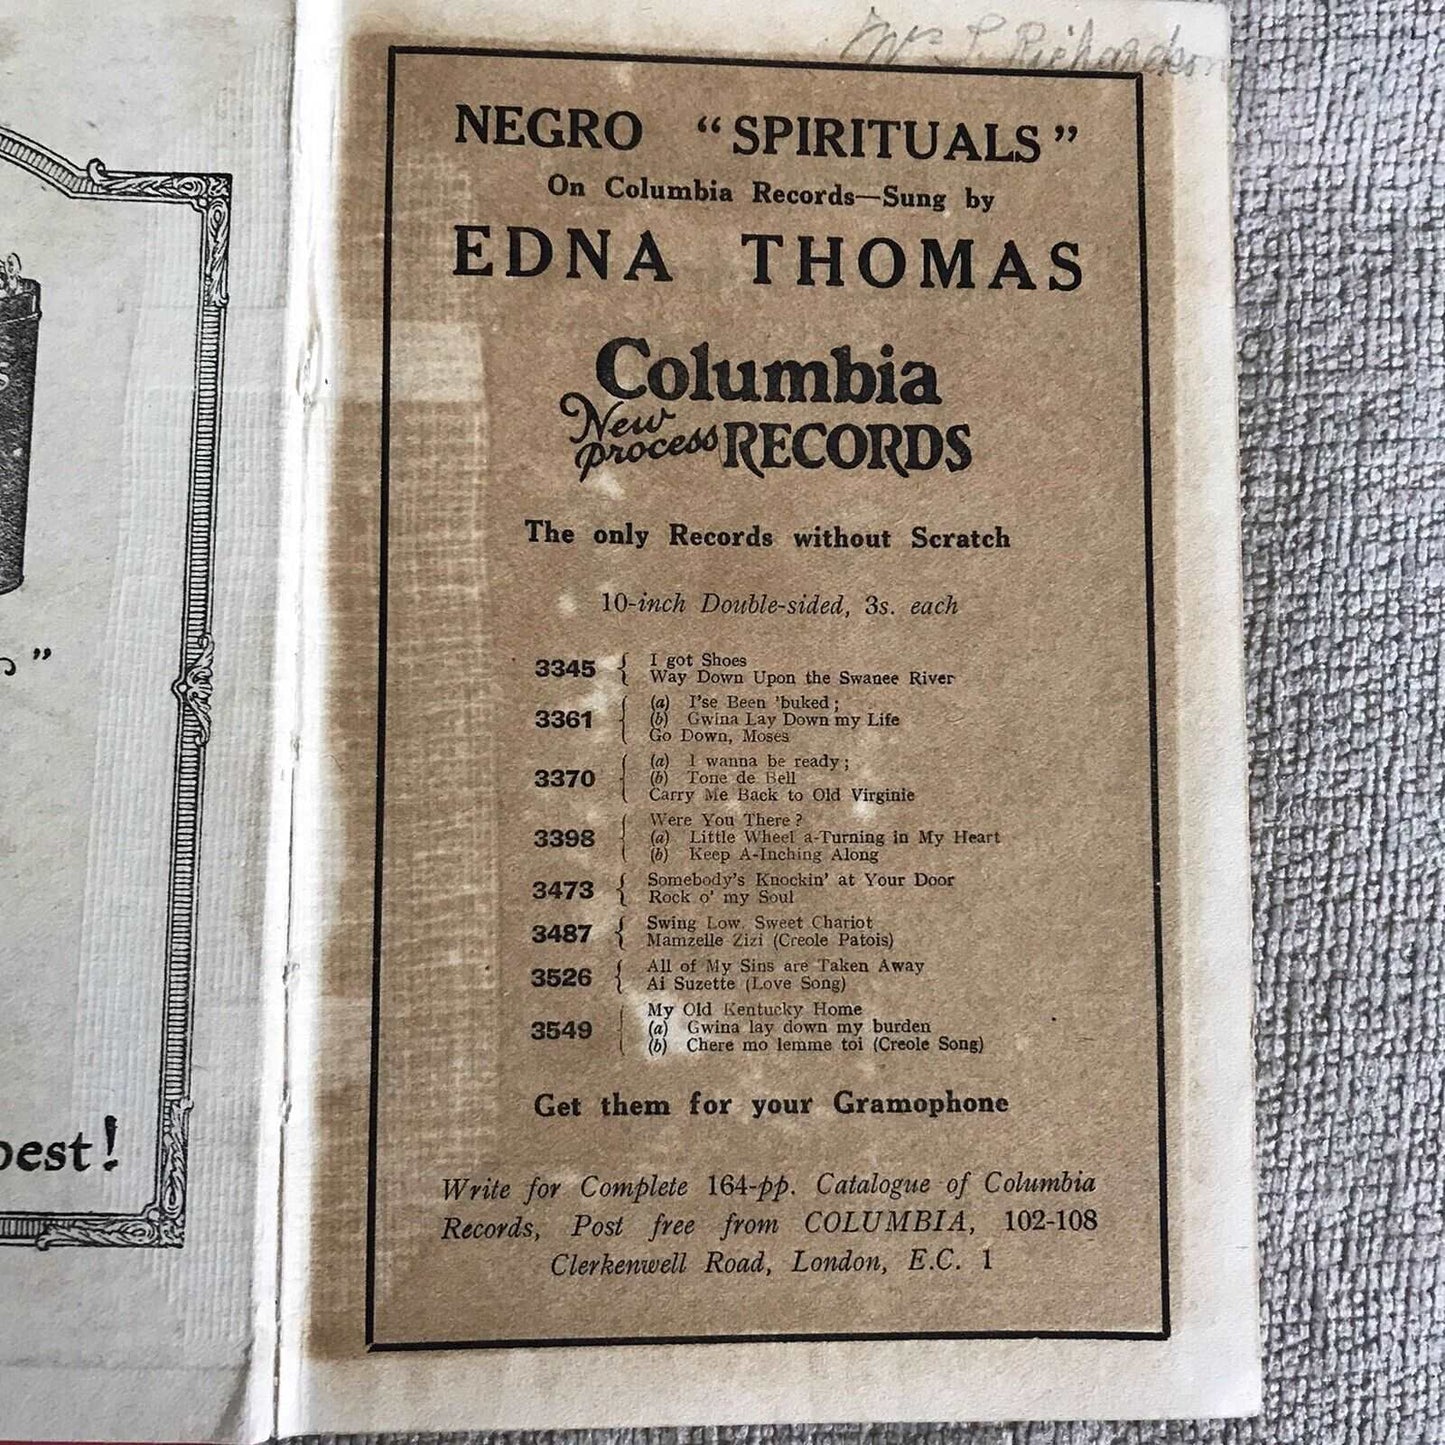 1920’s Negro Spirituals, Or The Songs Of The Jubilee Singers Publish By WJ Gibbs Honeyburn Books (UK)